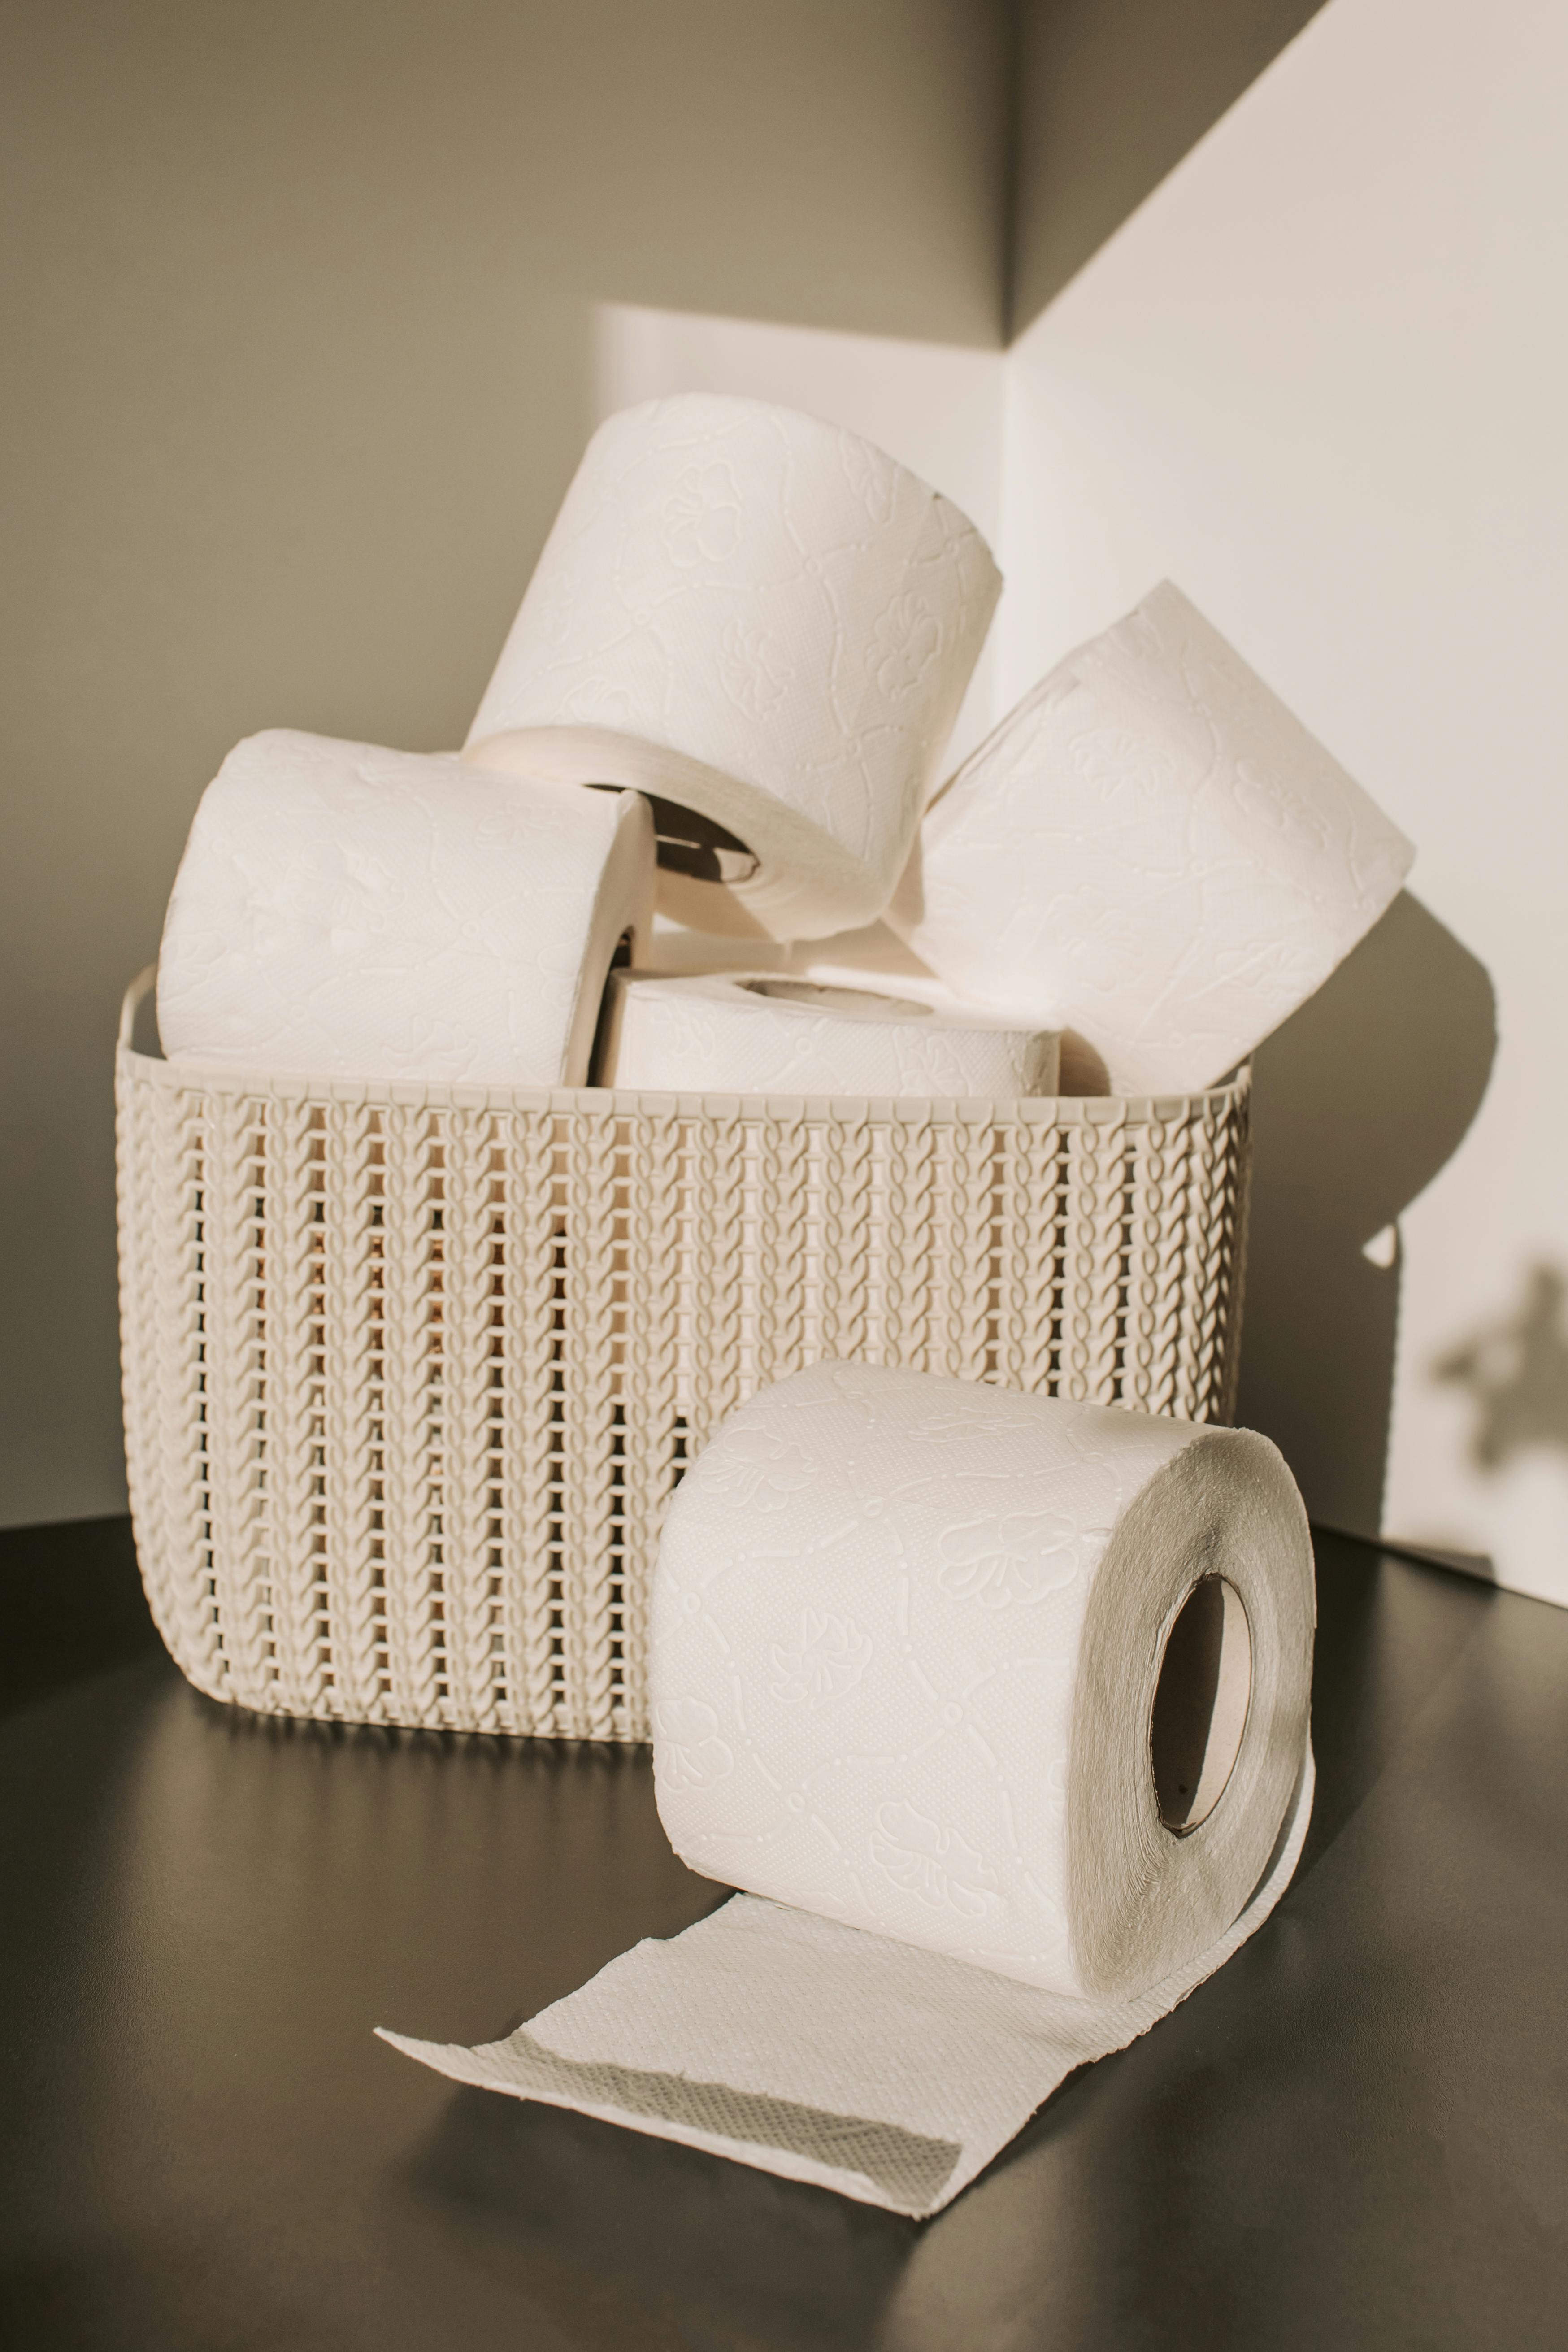 White toilet paper roll on brown wooden box photo – Free Coronavirus Image  on Unsplash